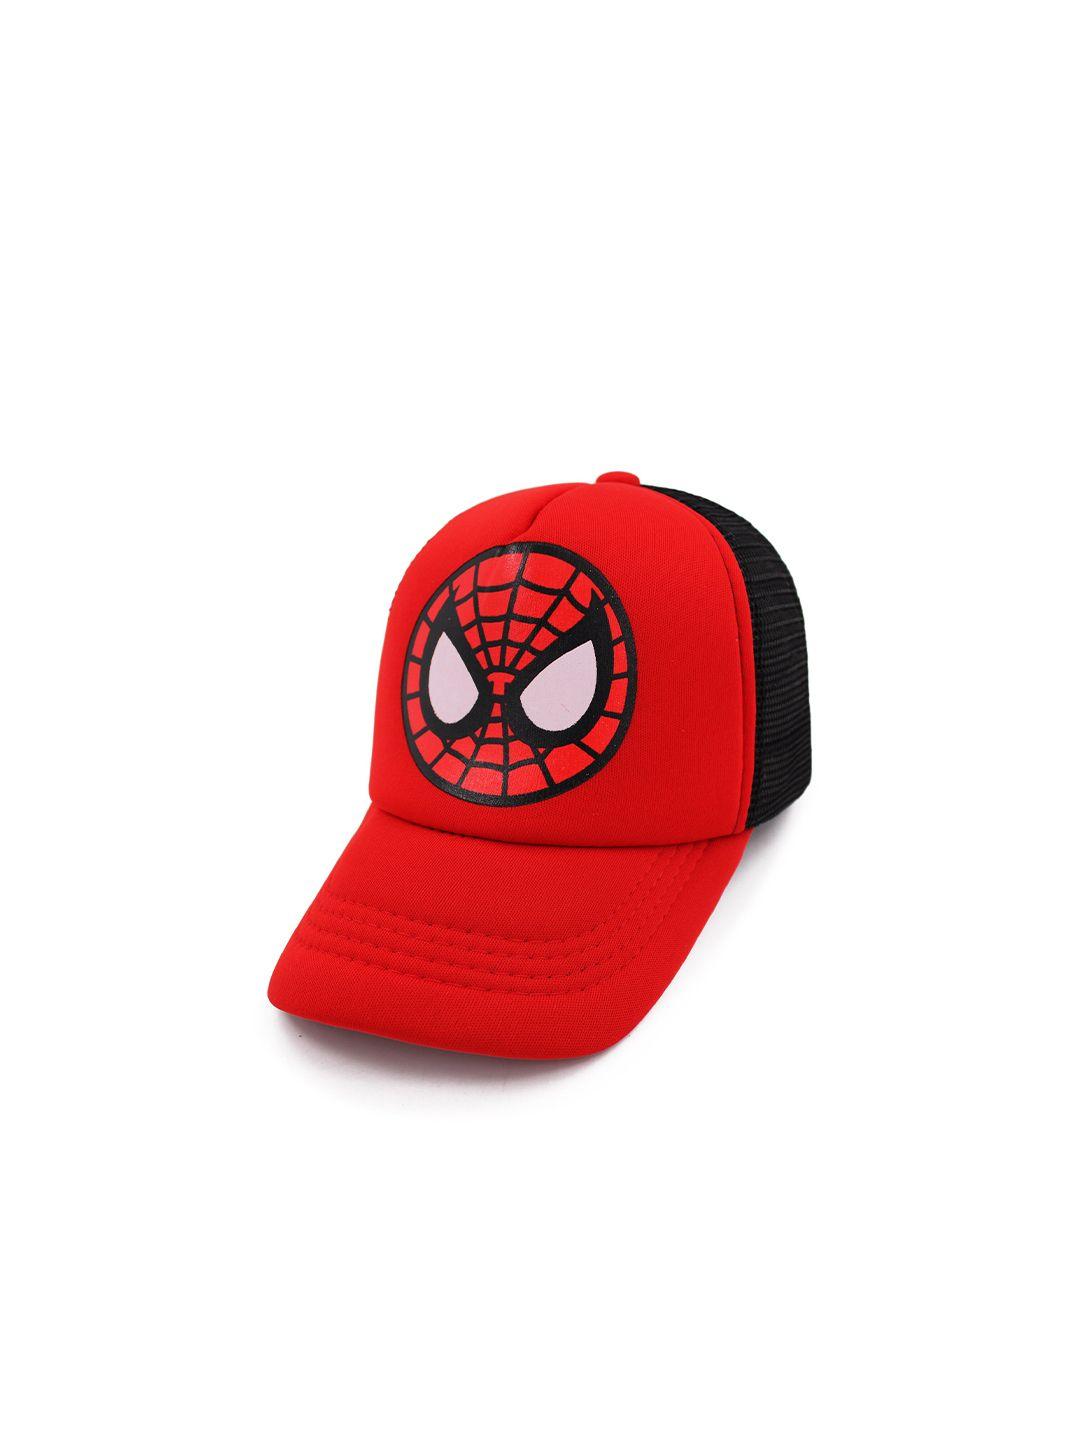 jenna boys red & black printed baseball cap